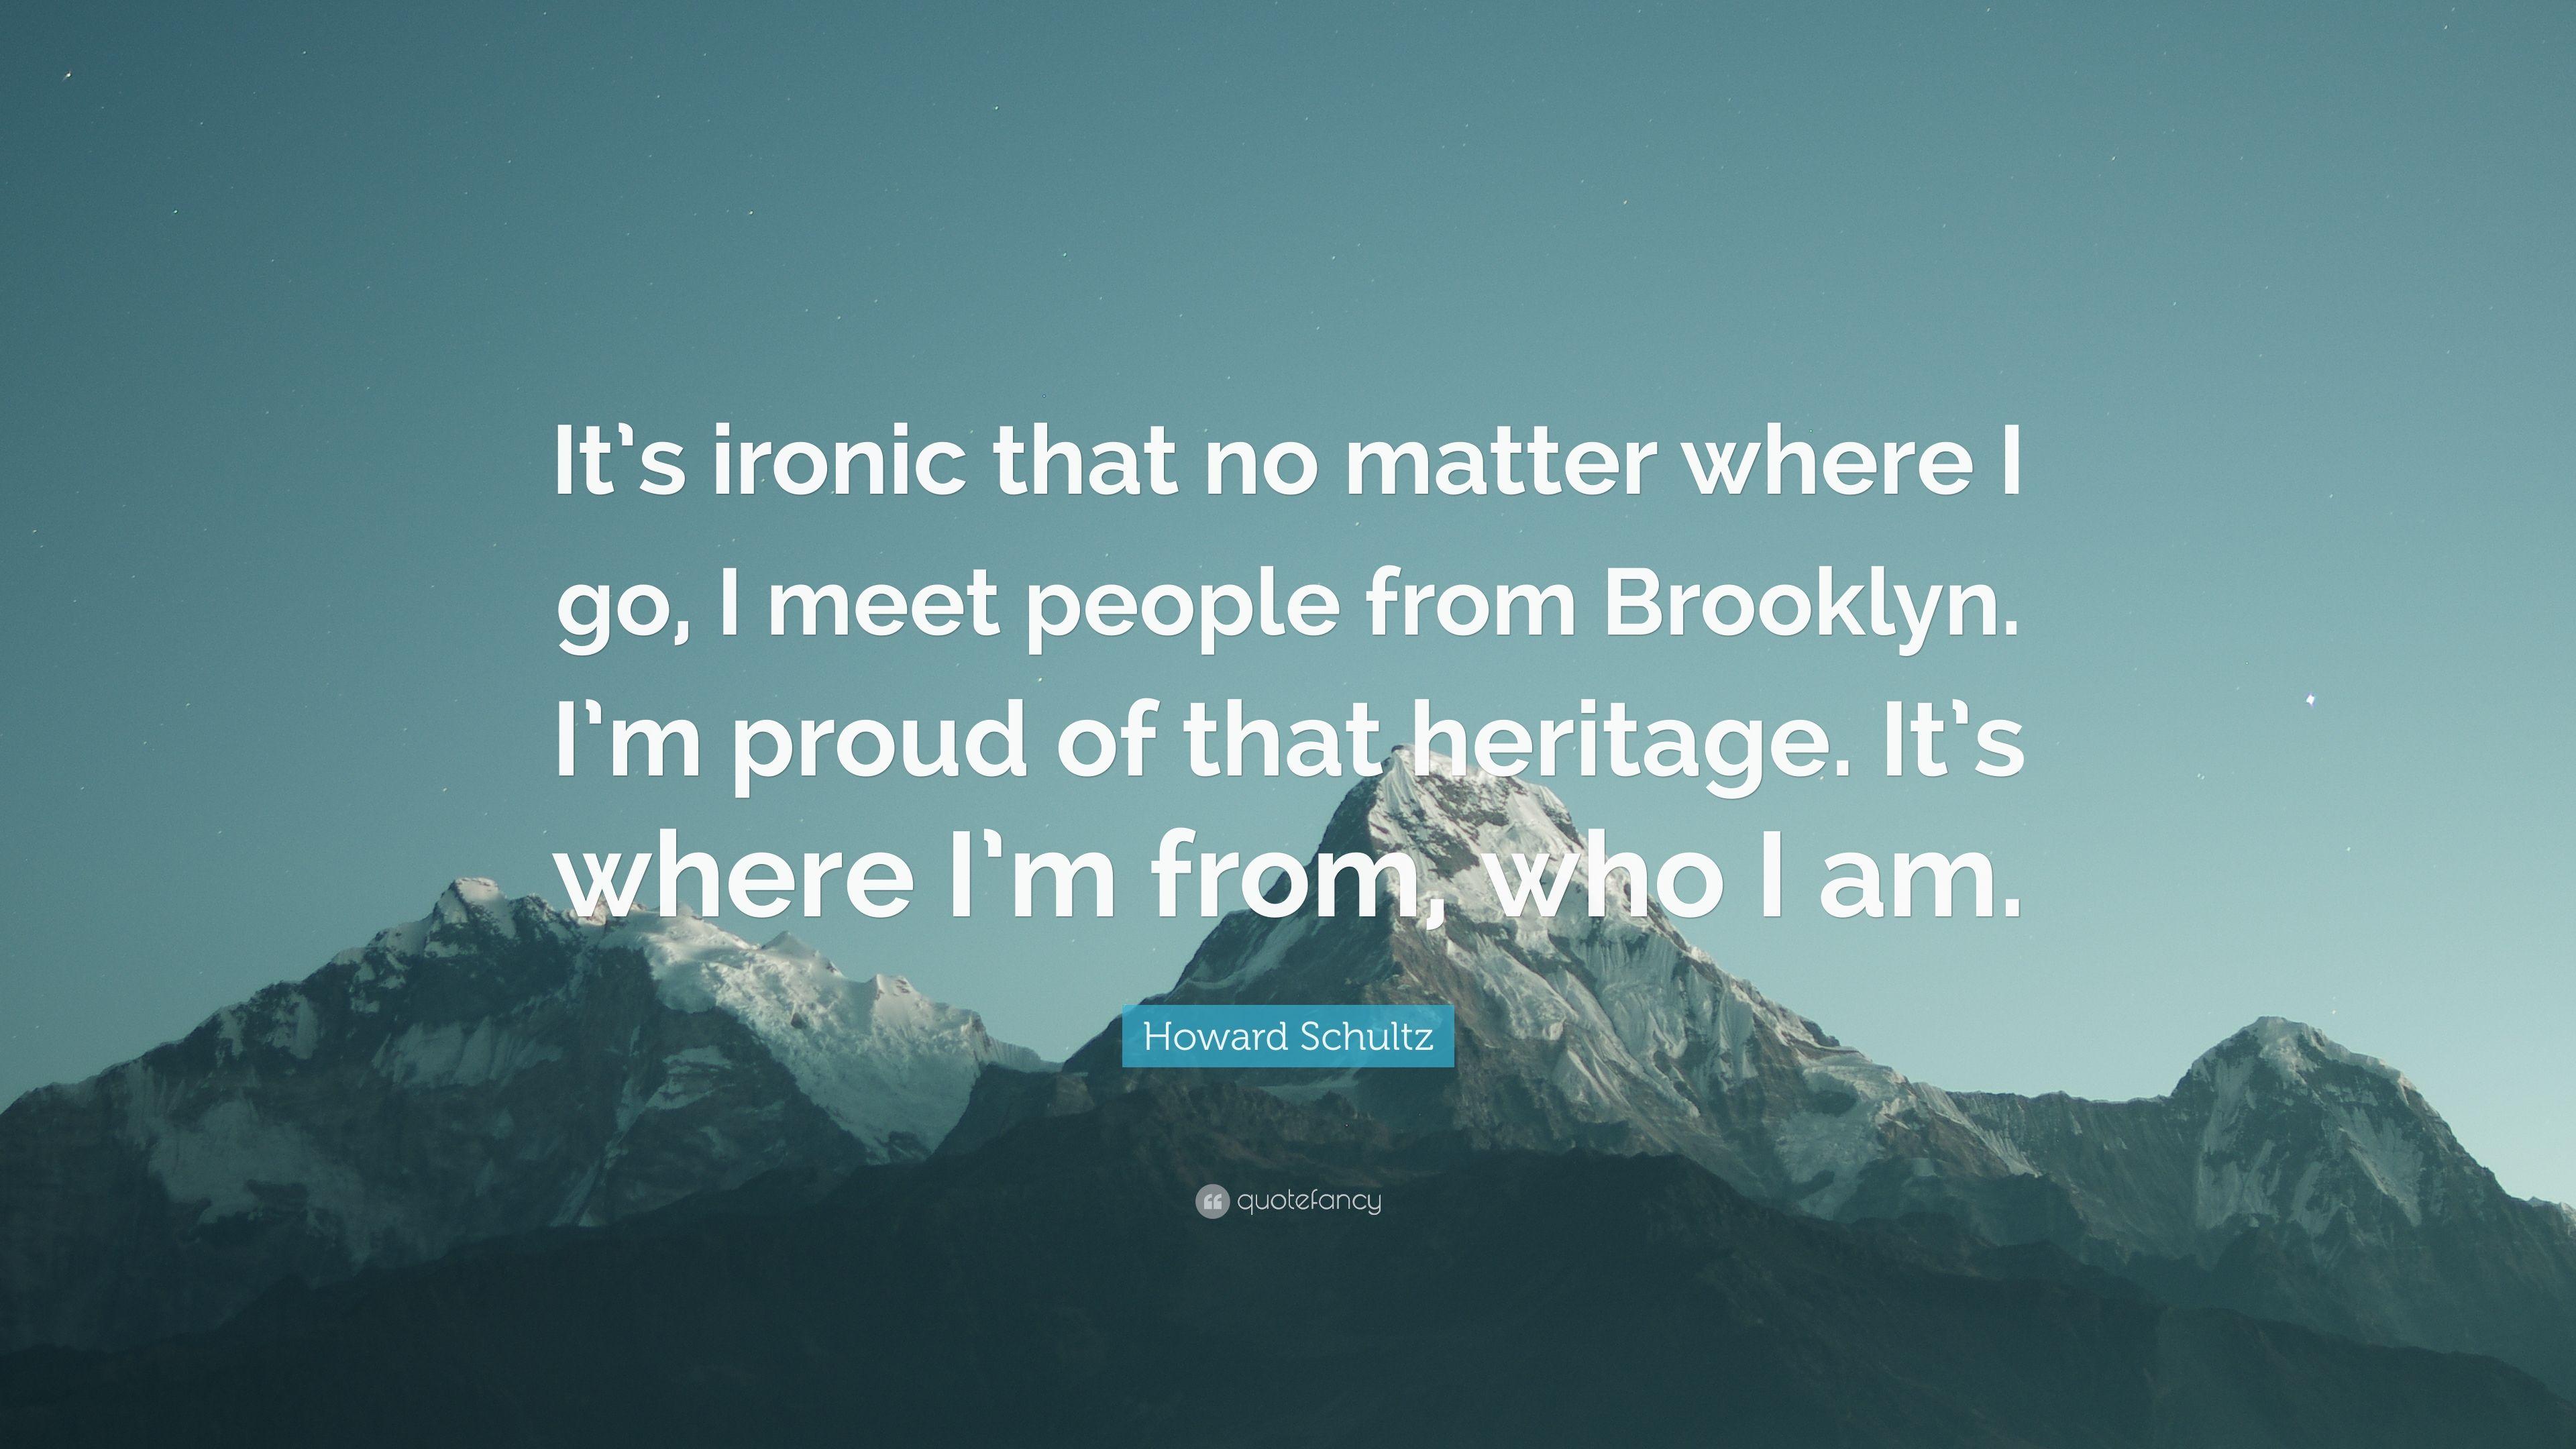 Howard Schultz Quote: “It's ironic that no matter where I go, I meet